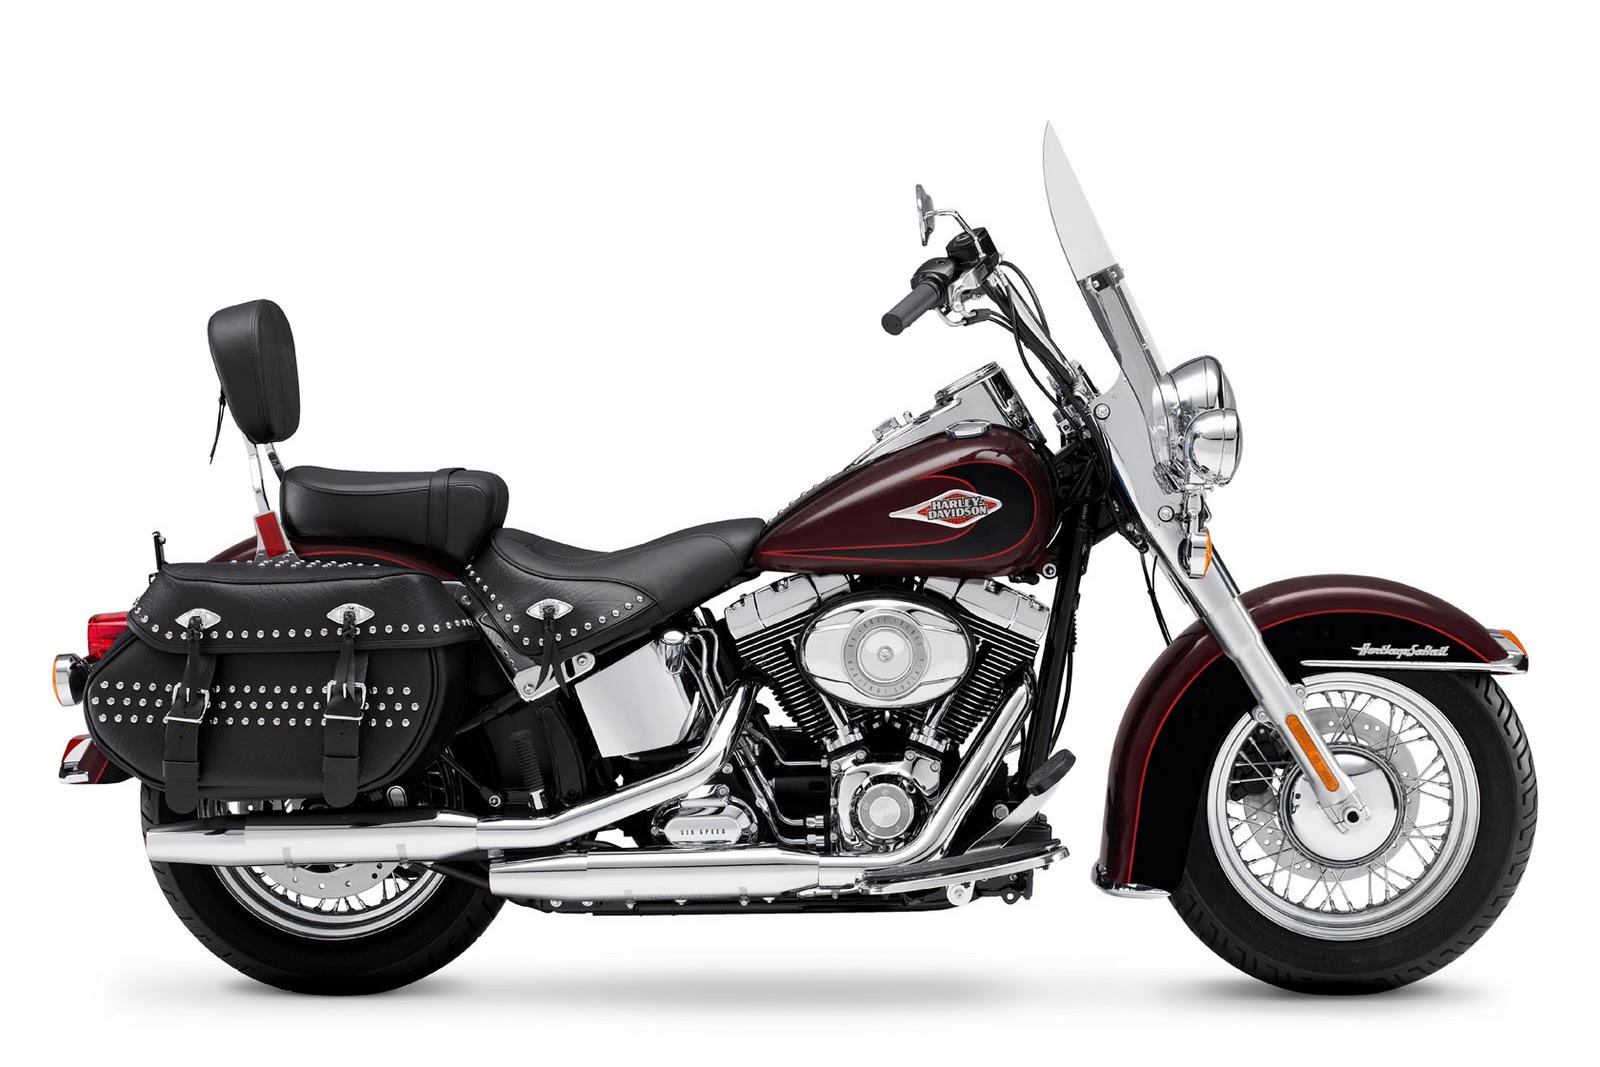 Harley-Davidson CVO Softail Deluxe 1800cc photo - 1